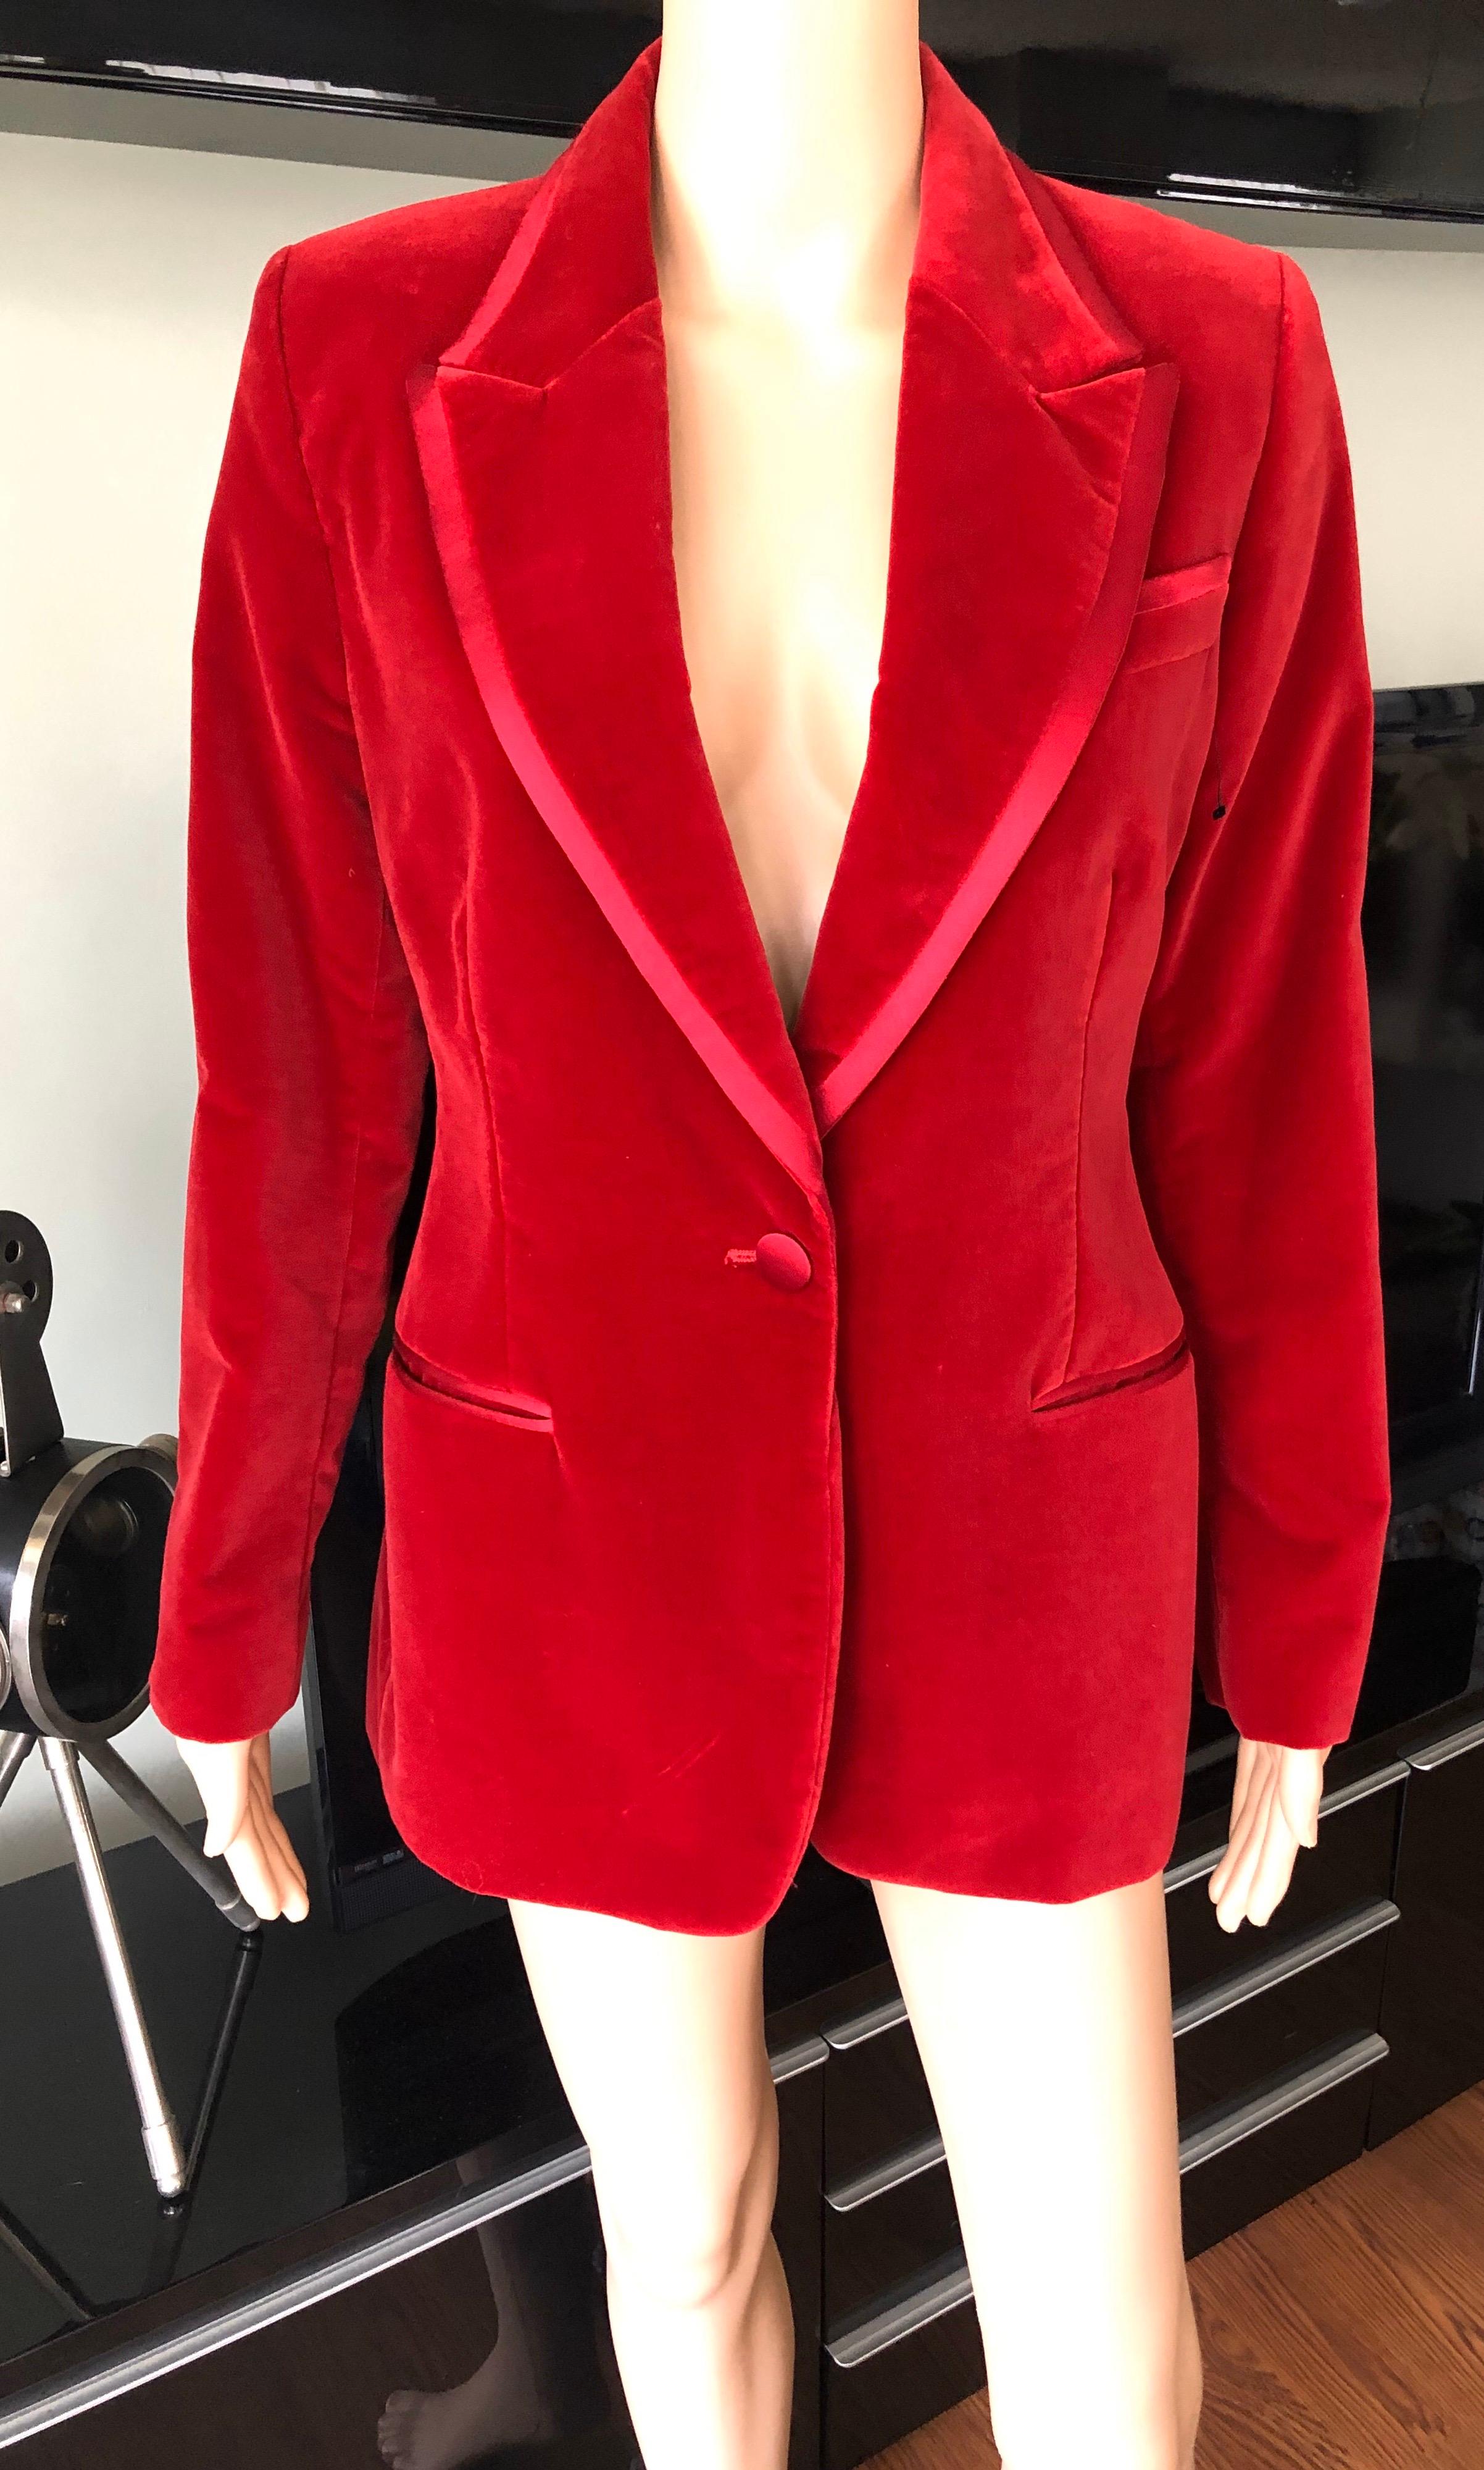 tom ford gucci red velvet suit